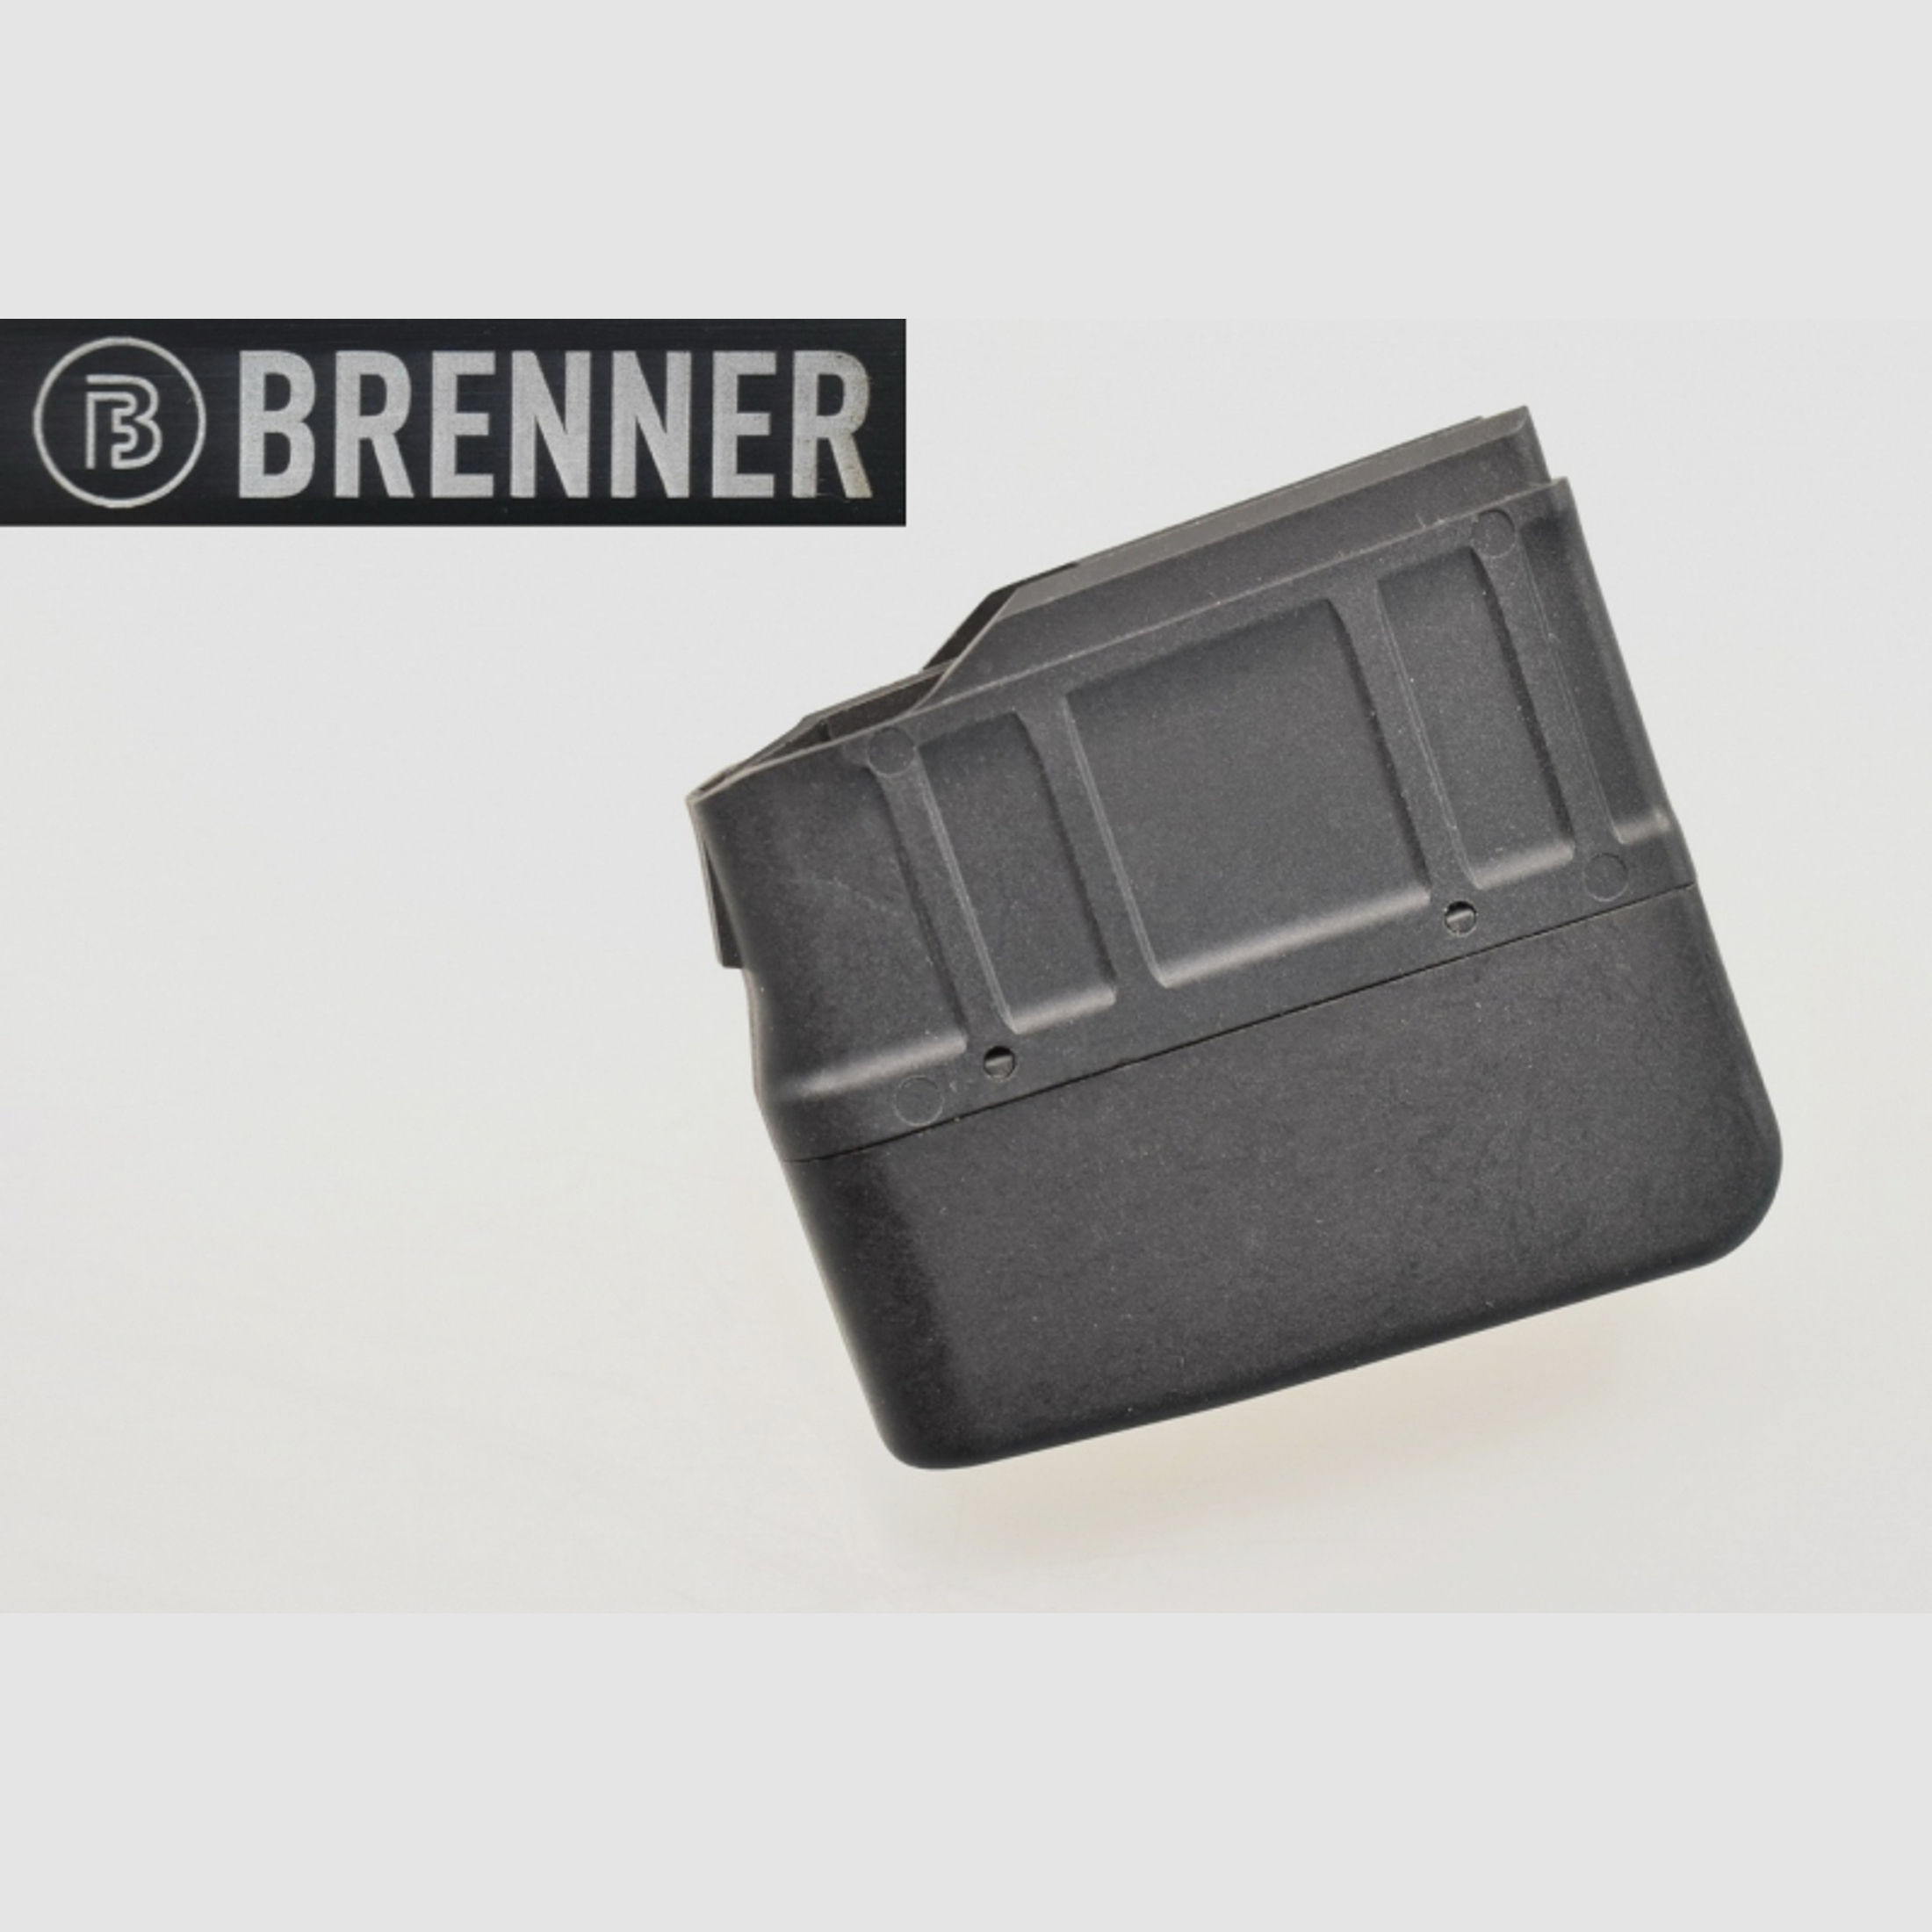 BRENNER BR20 5 - Schuß Magazin im Kal .308 Winchester ! Neuware !